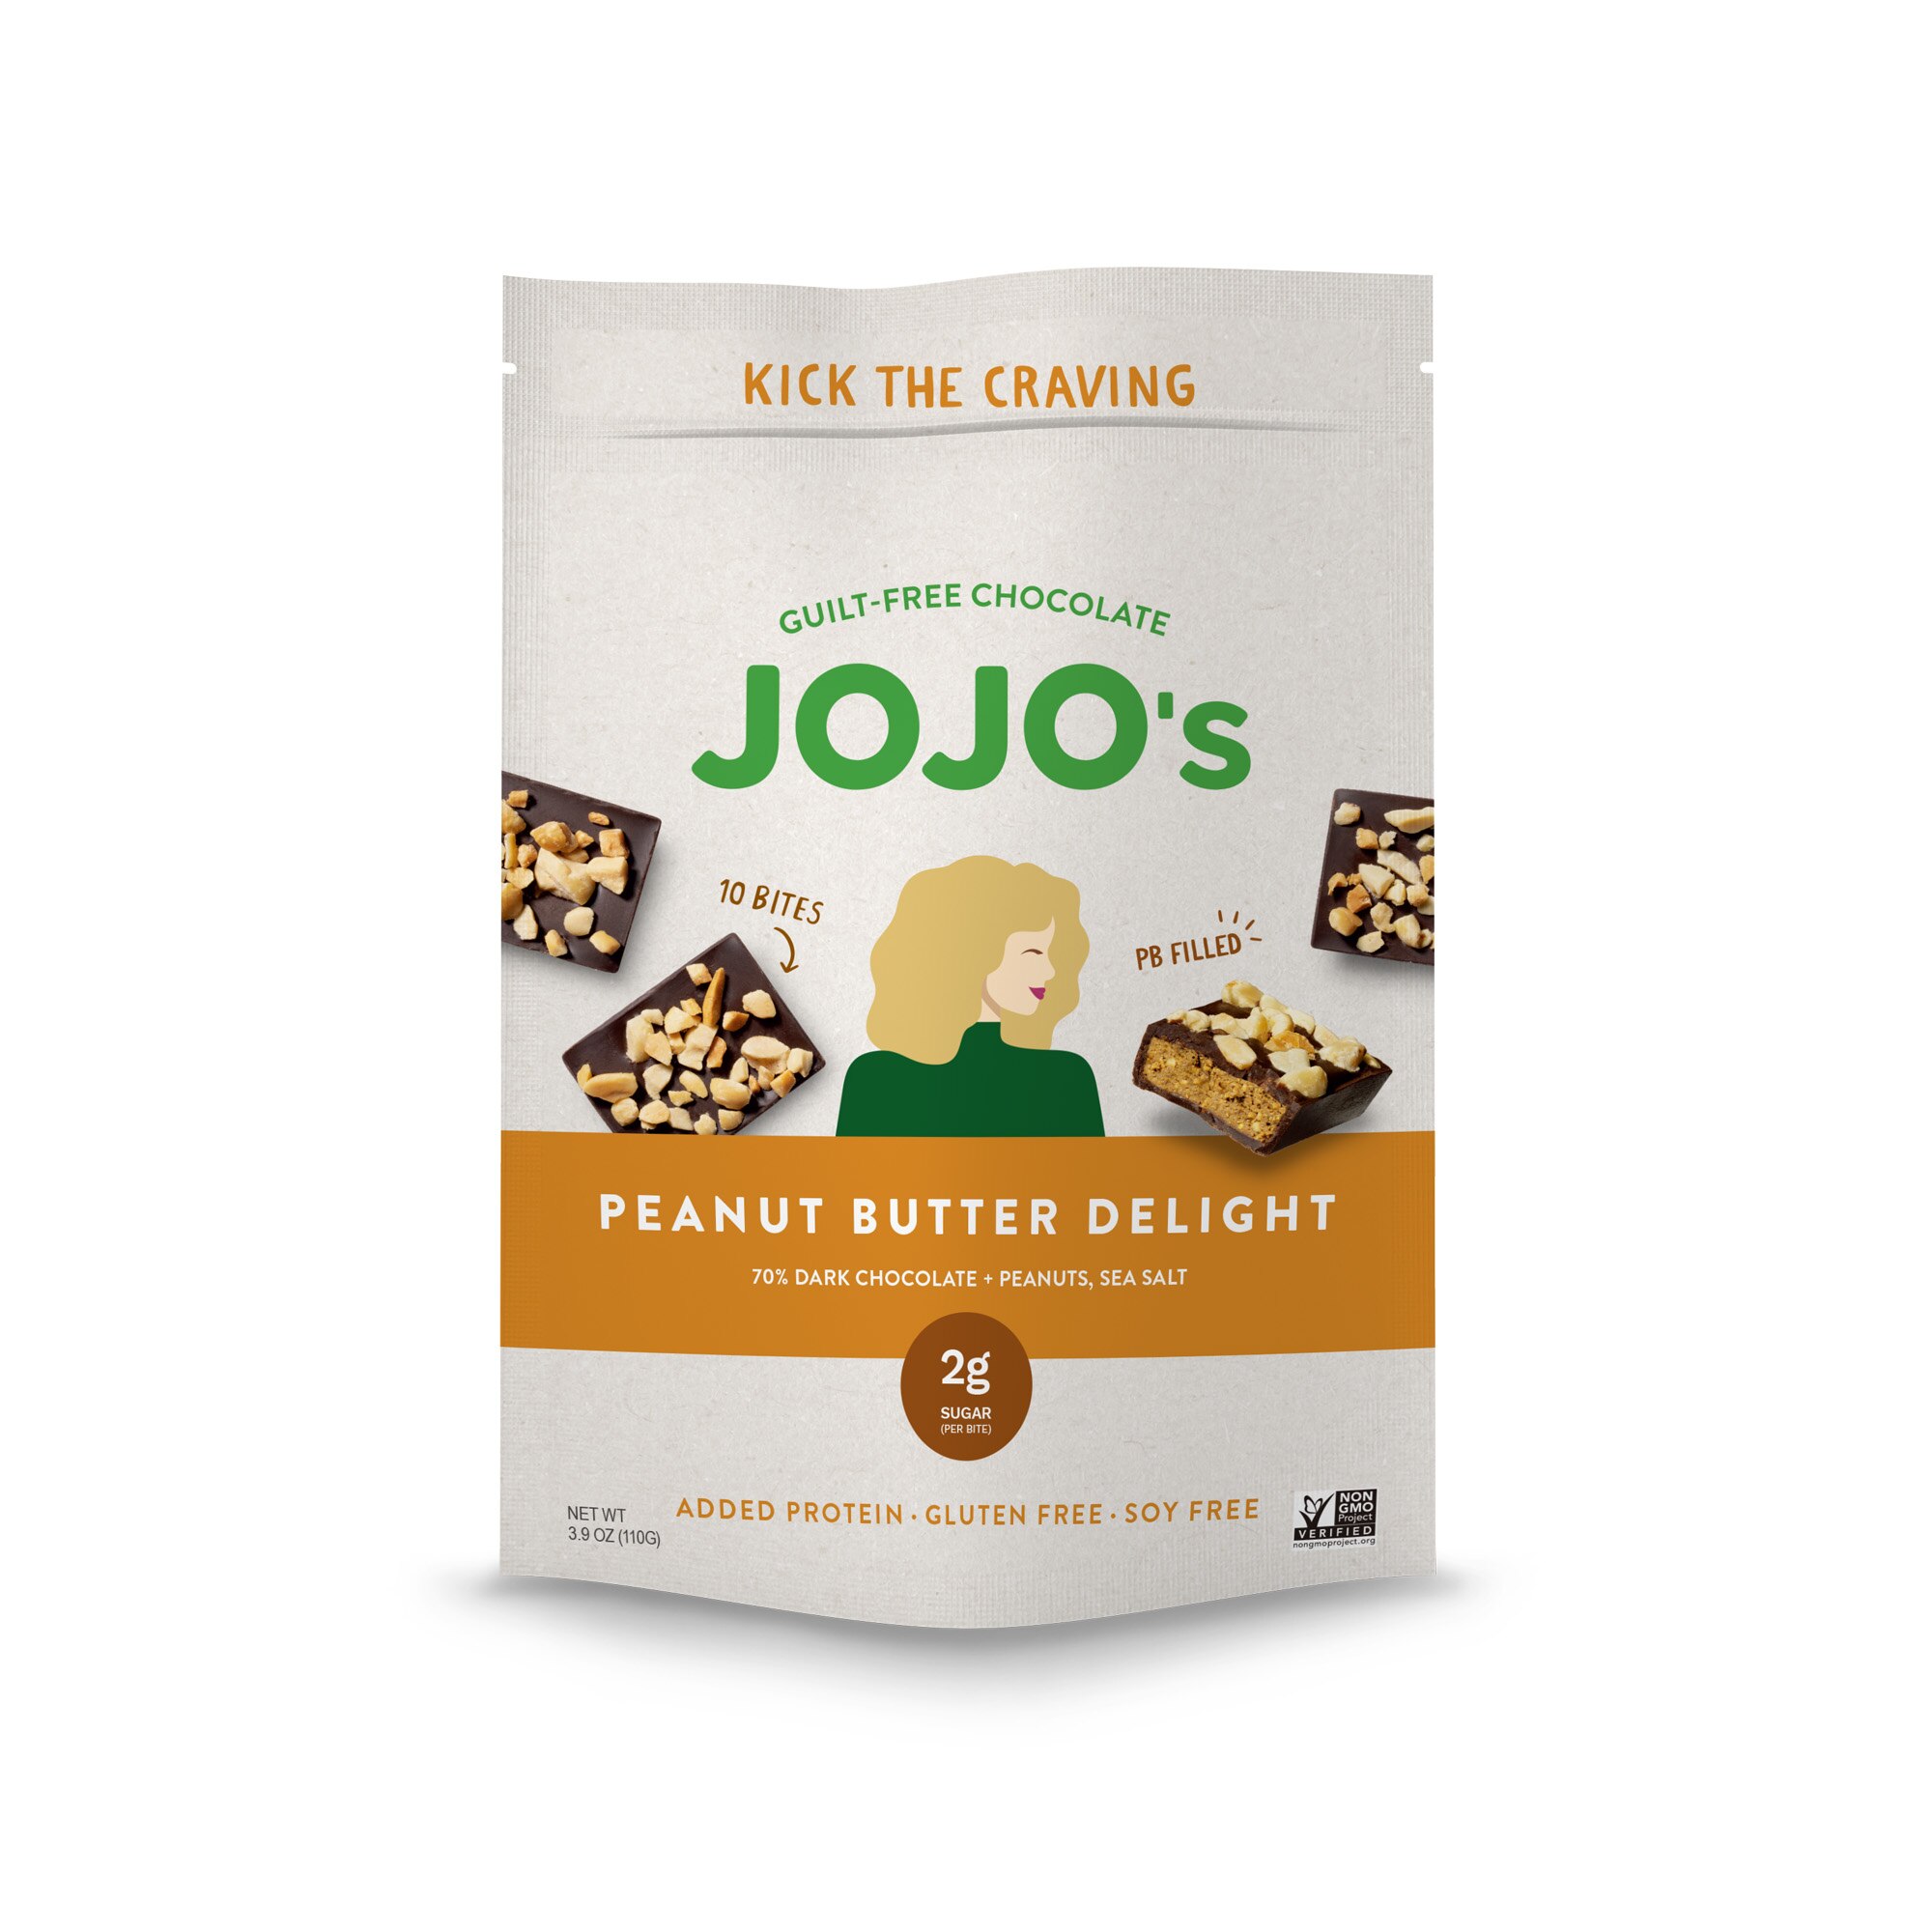 JOJO's Peanut Butter Delight Guilt-Free Chocolate Bites, 3.9 oz